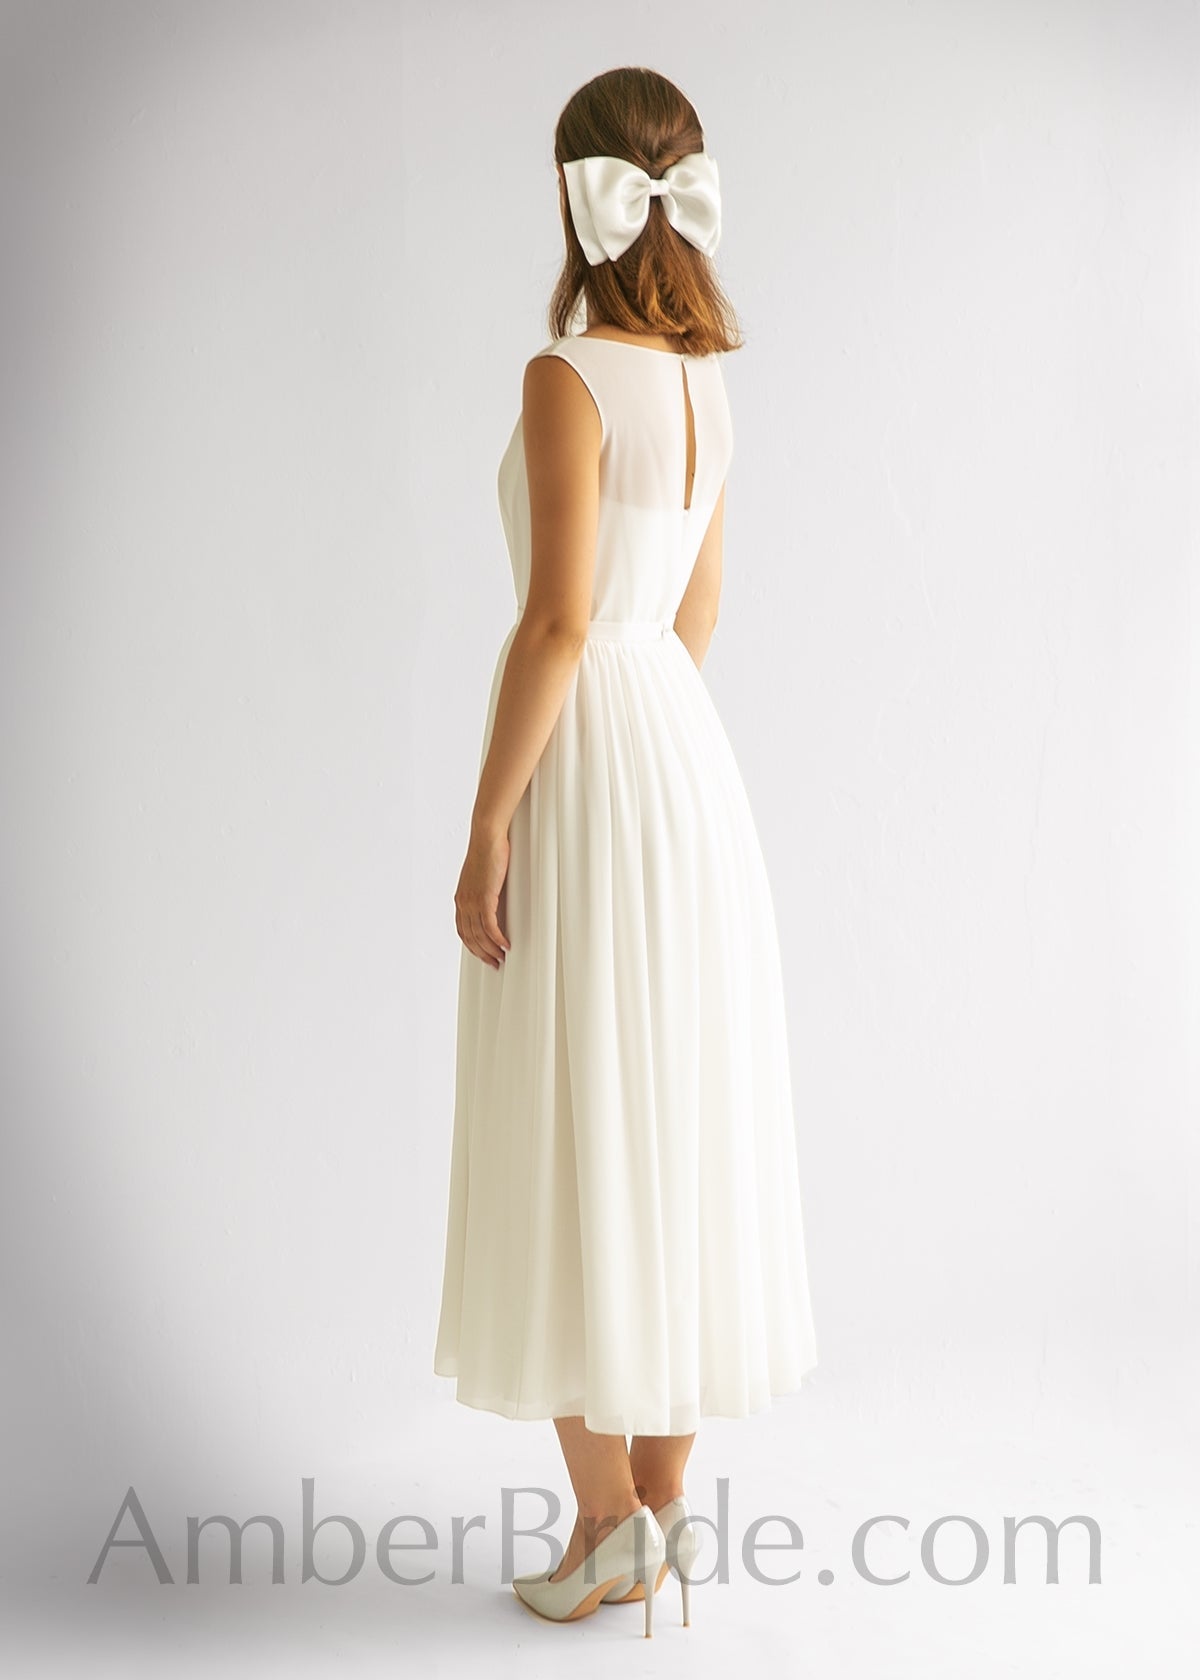 Simple A Line Tea Length Short Sleeveless Chiffon Wedding Dress - AmberBride